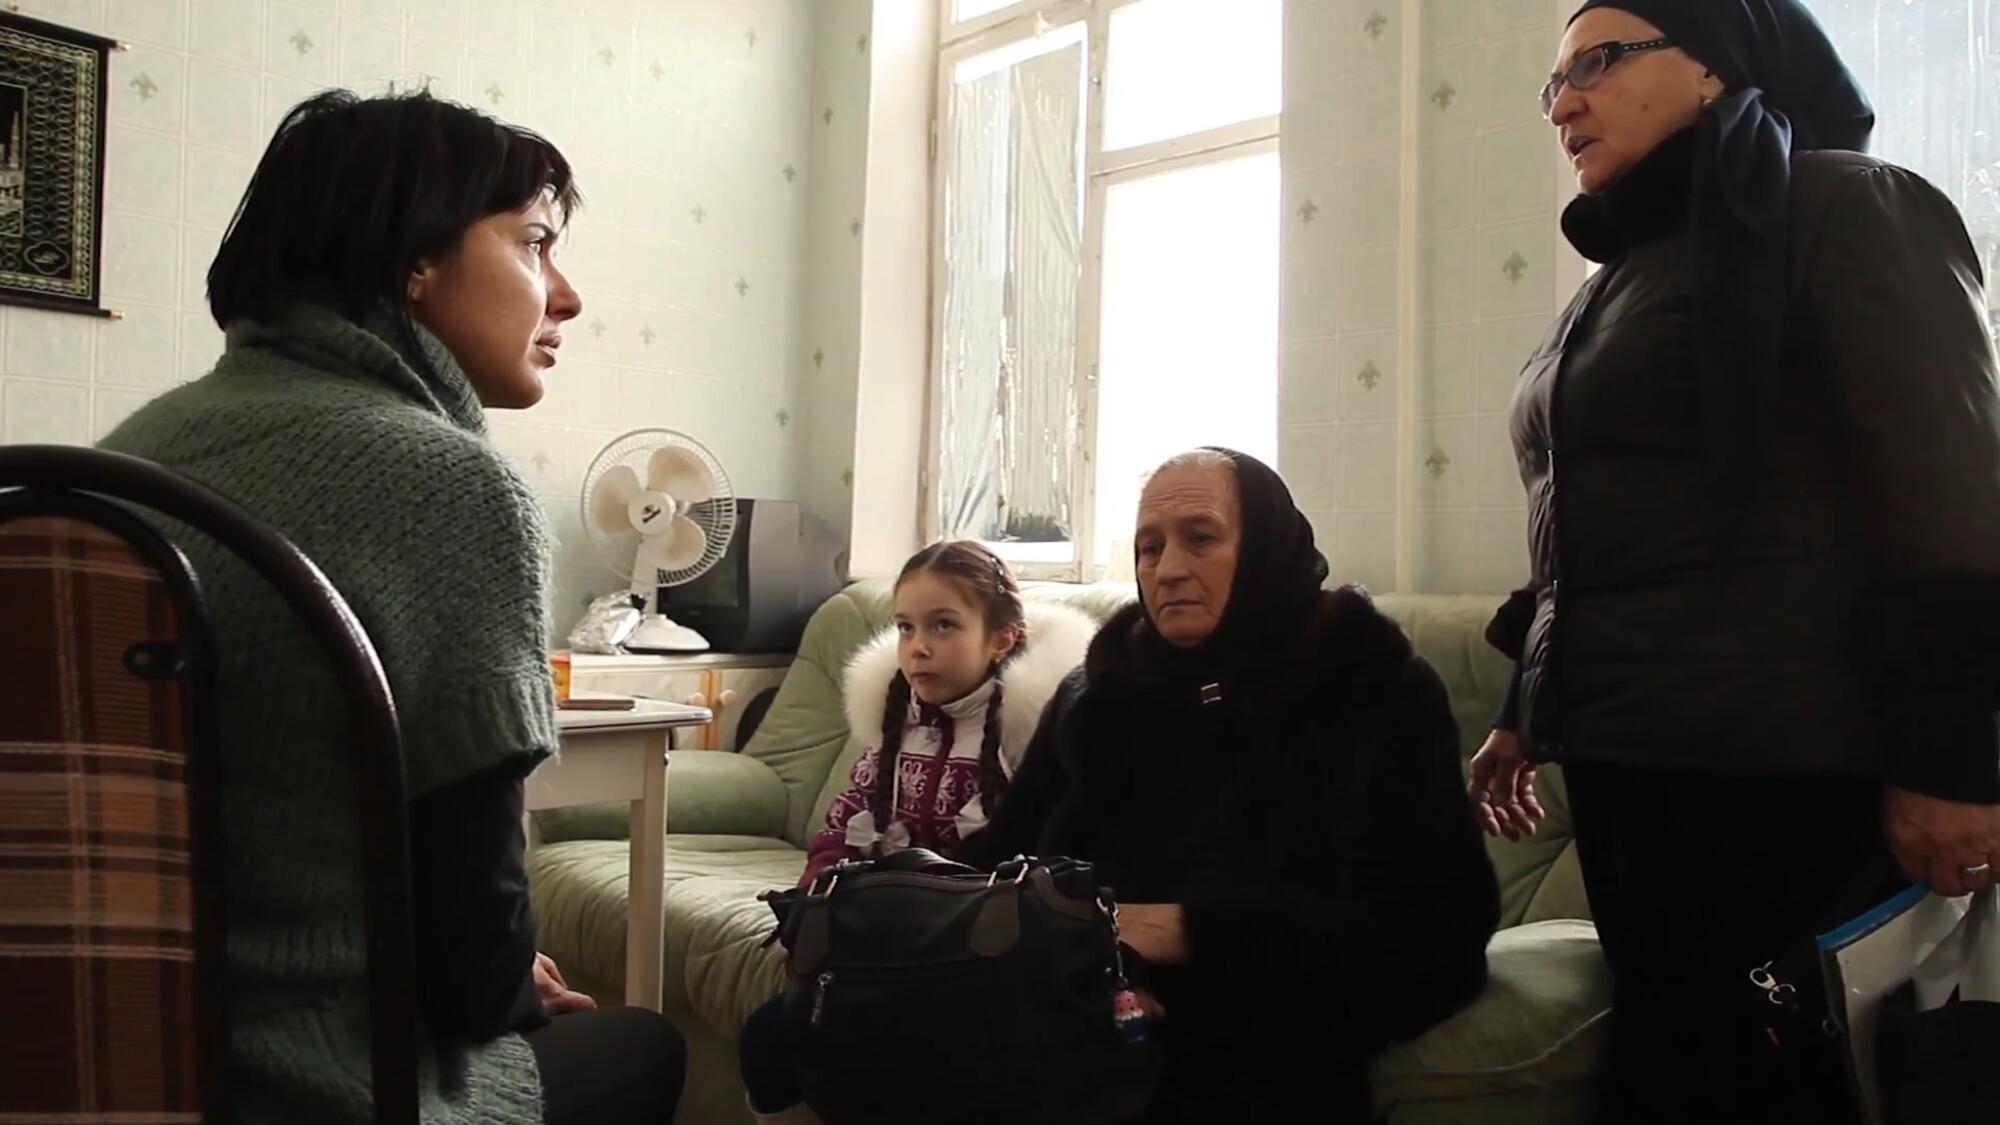 Marta Ter entrevista a familiares de desaparecidos en Chechenia. / Archivo personal